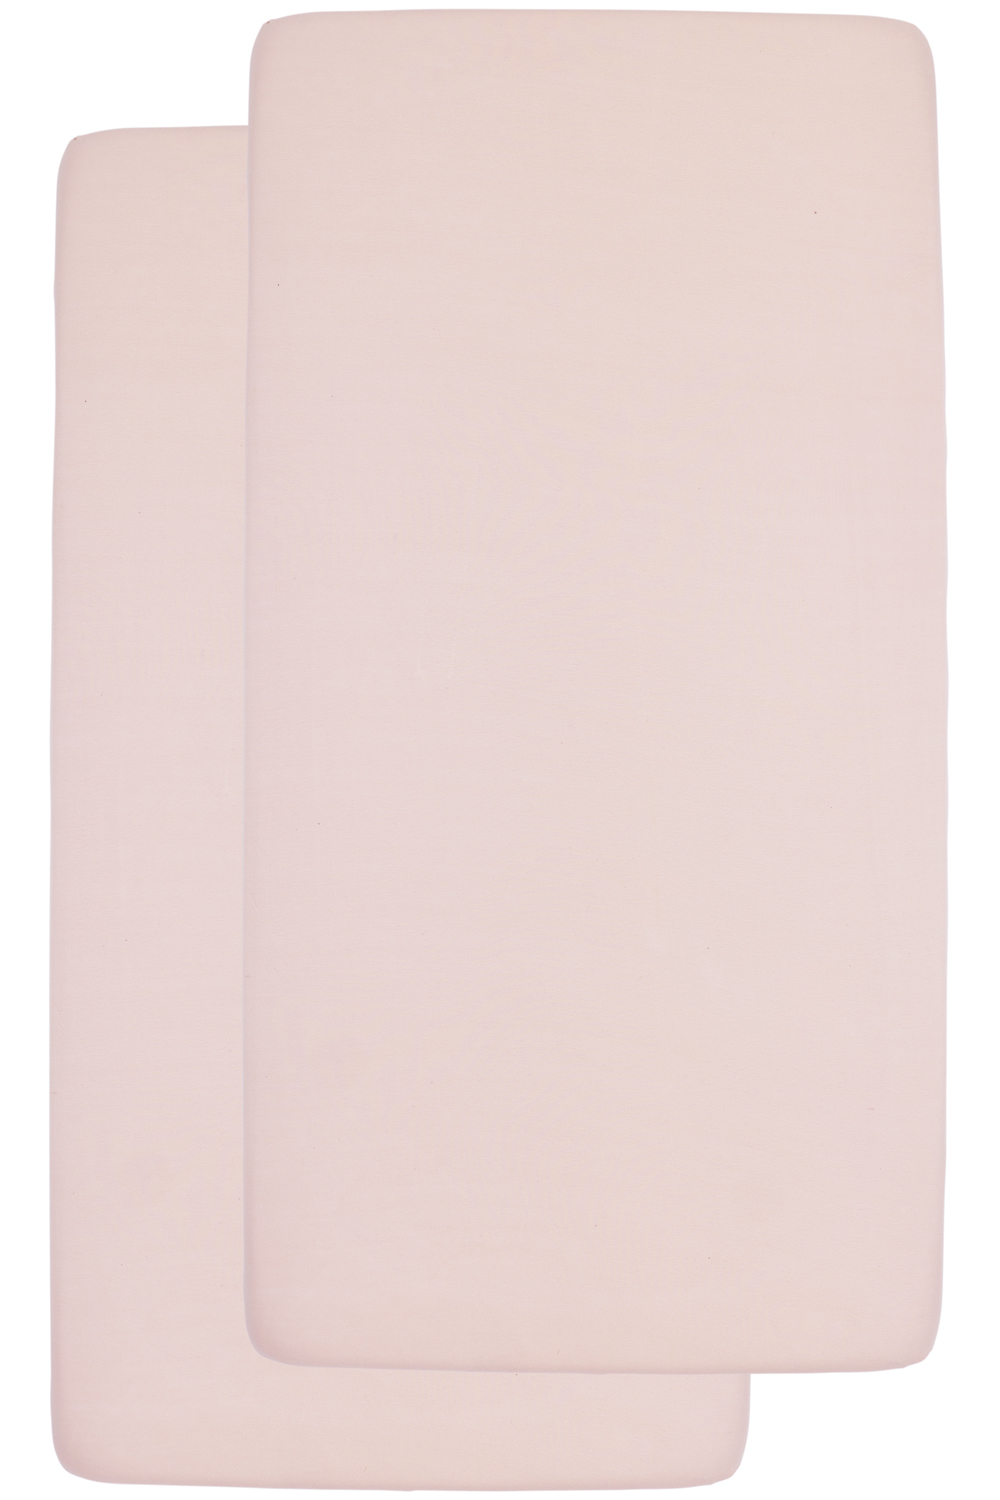 Spannbettlaken Juniorbett 2er pack Uni - soft pink - 70x140/150cm